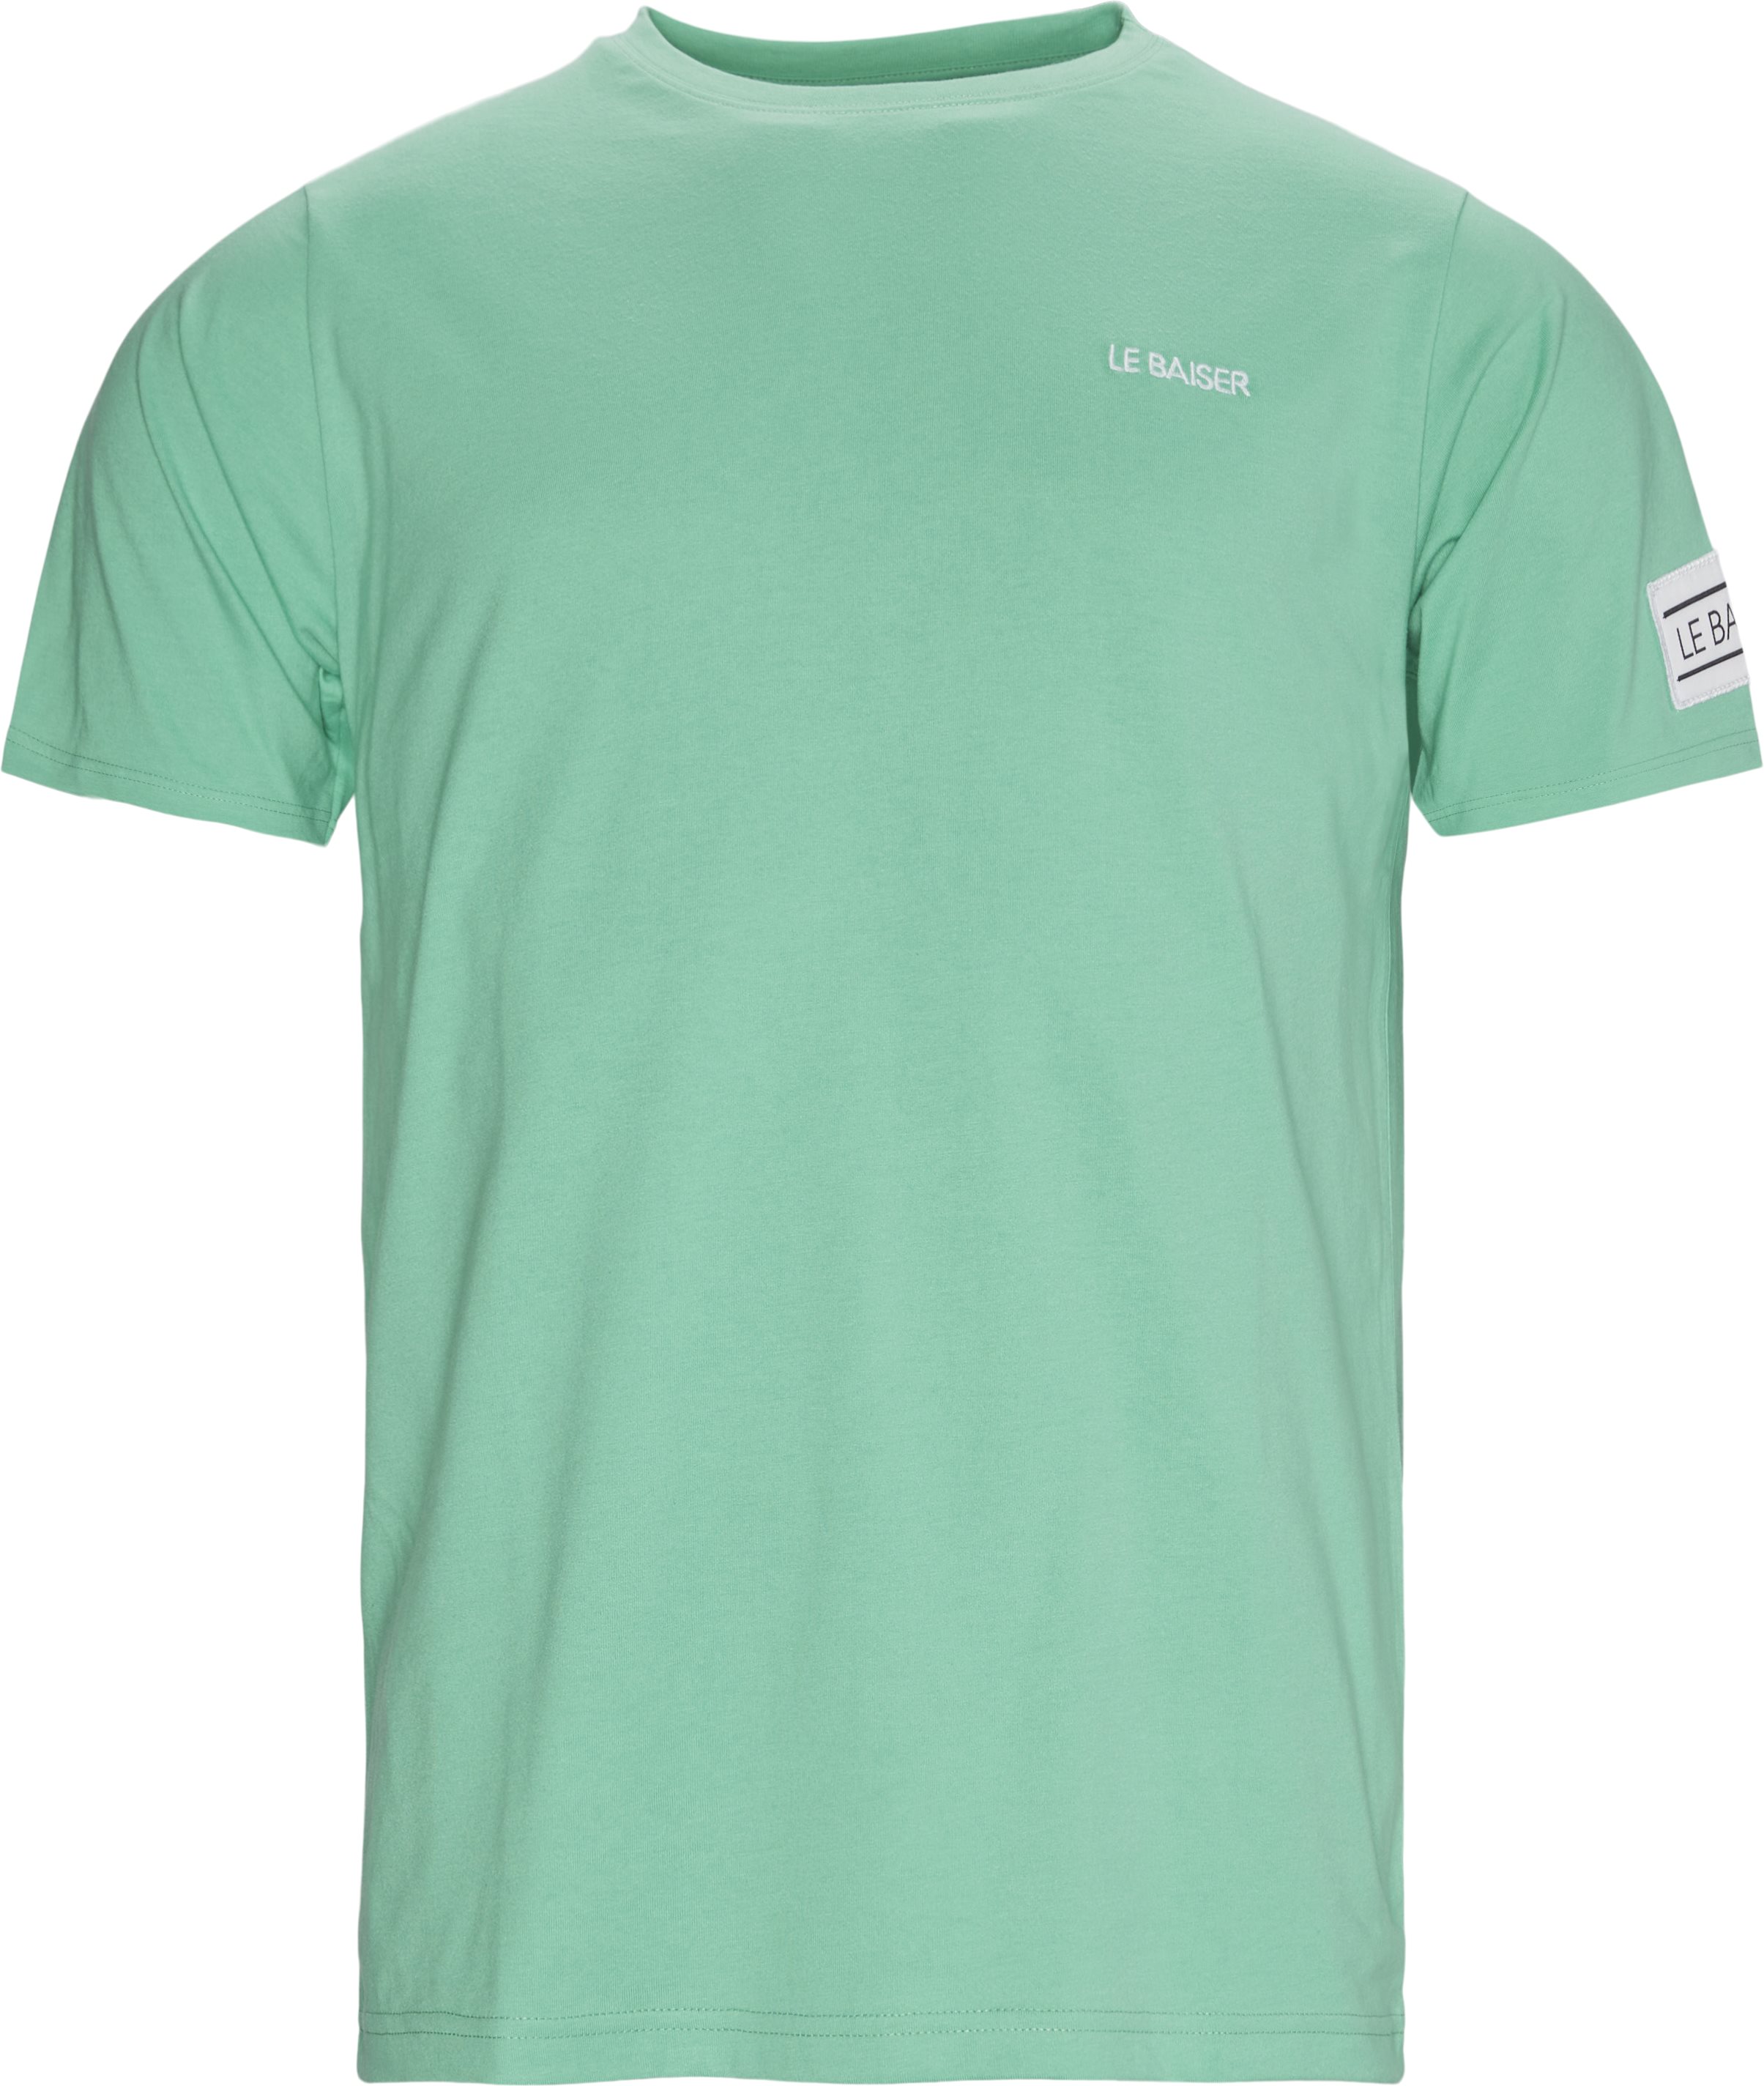 Bourg Tee - T-shirts - Regular fit - Green